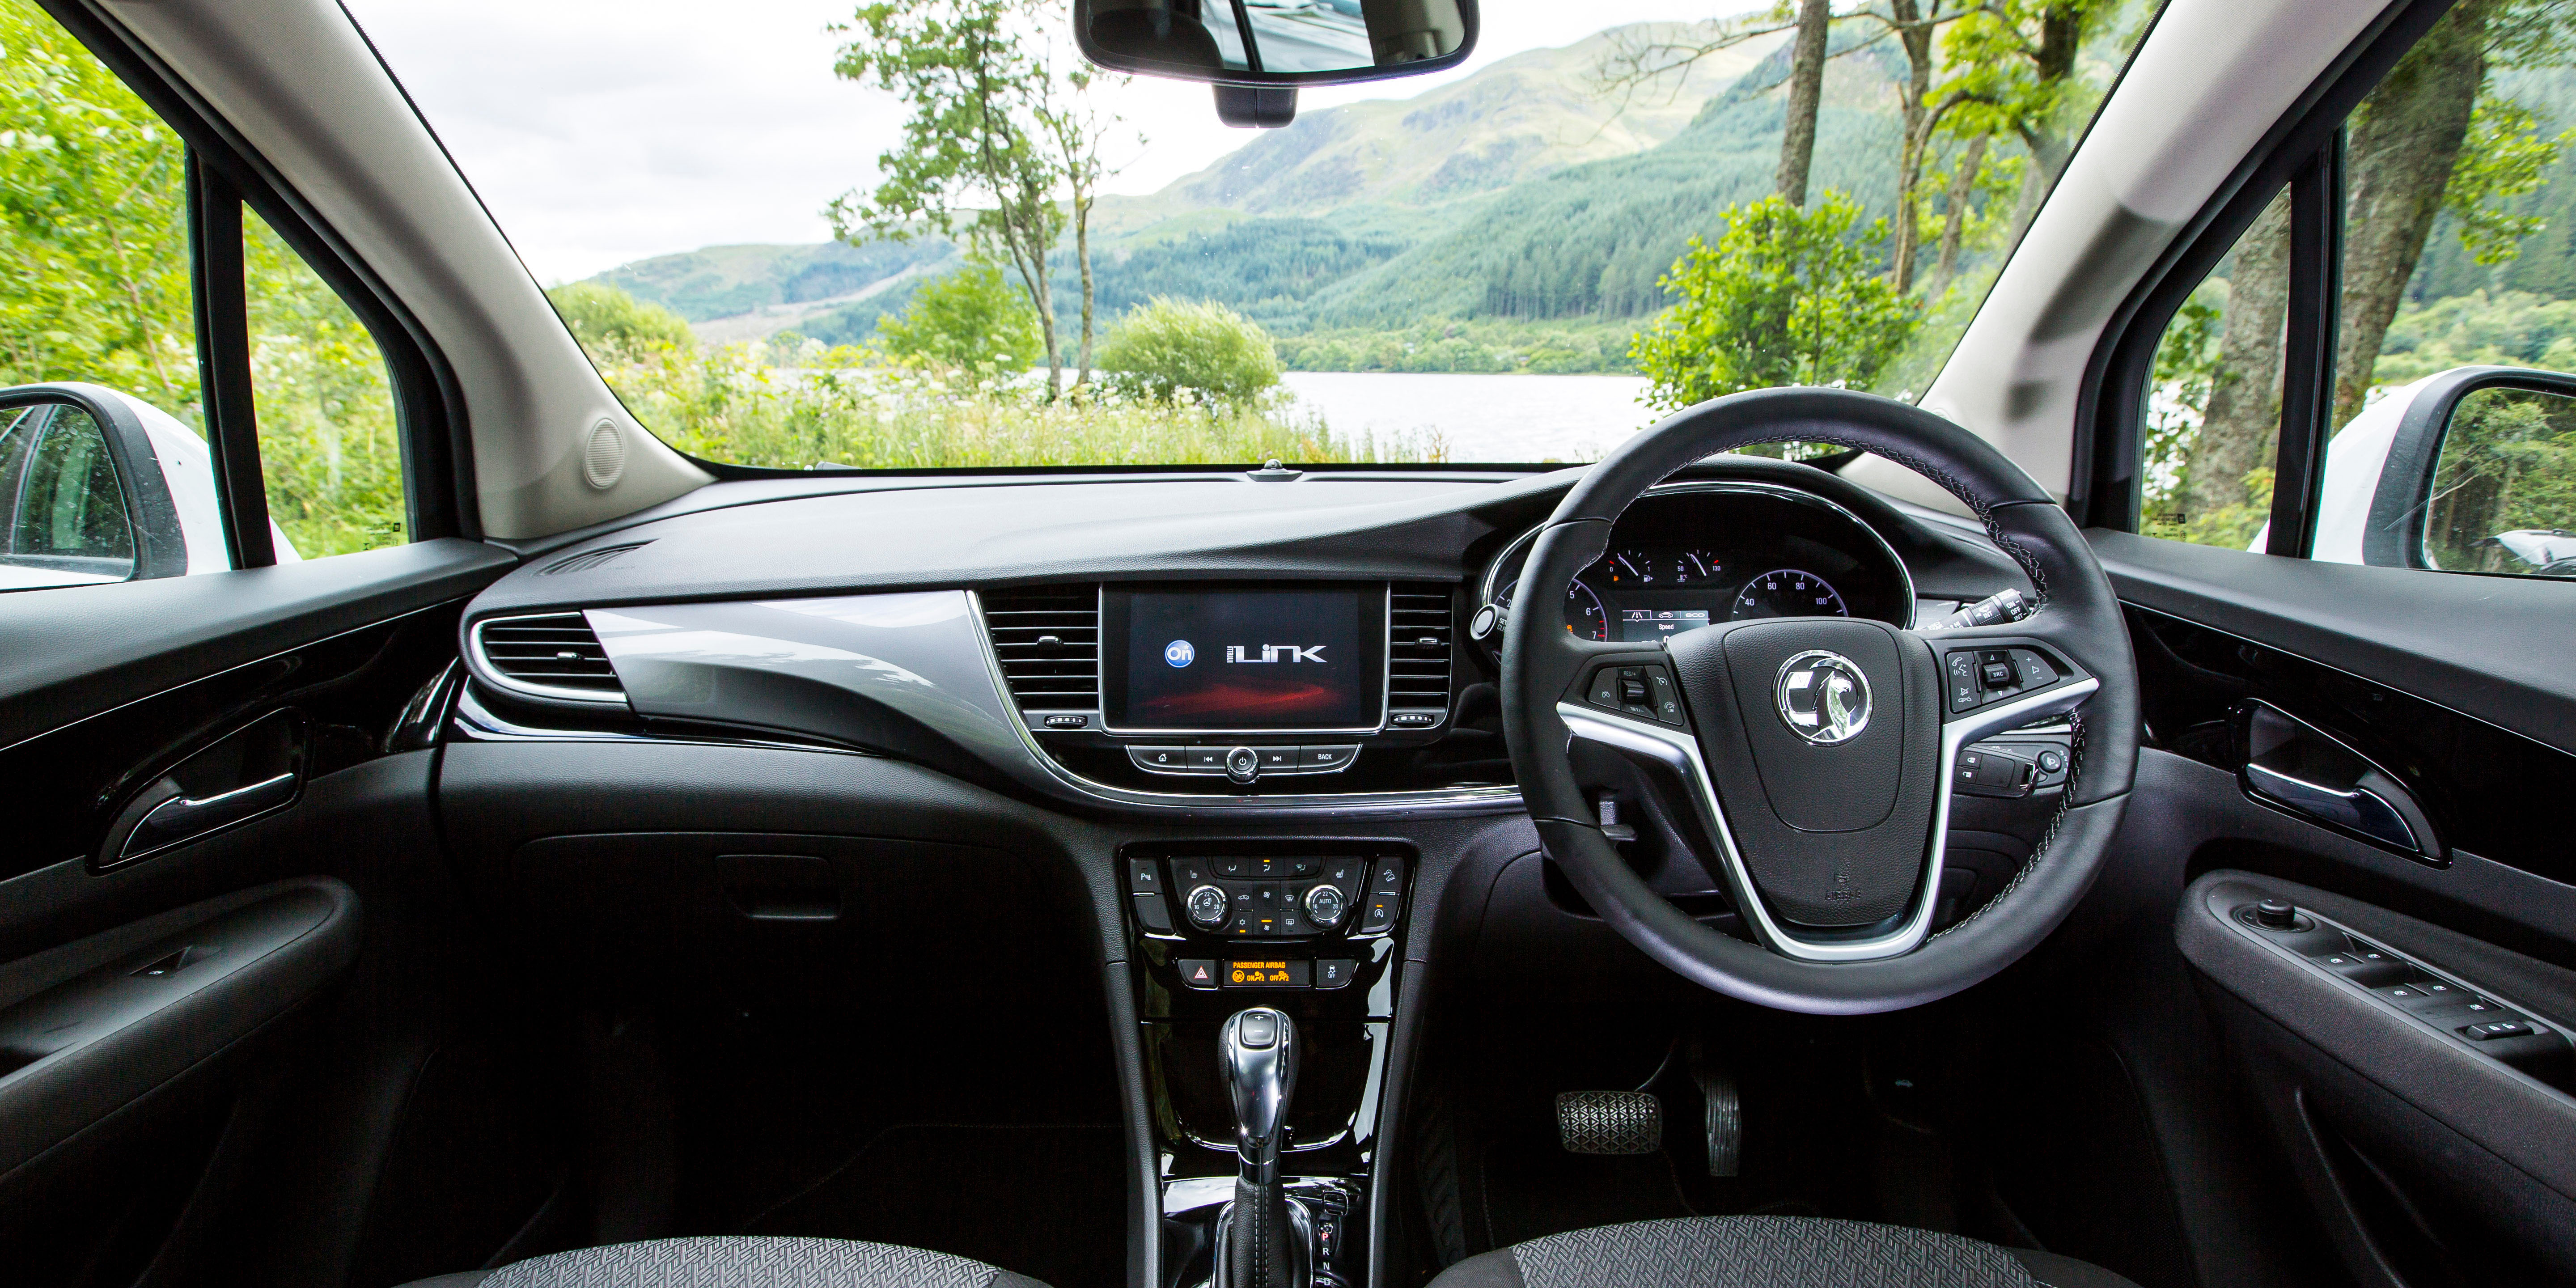 Opel Zafira interior specifications